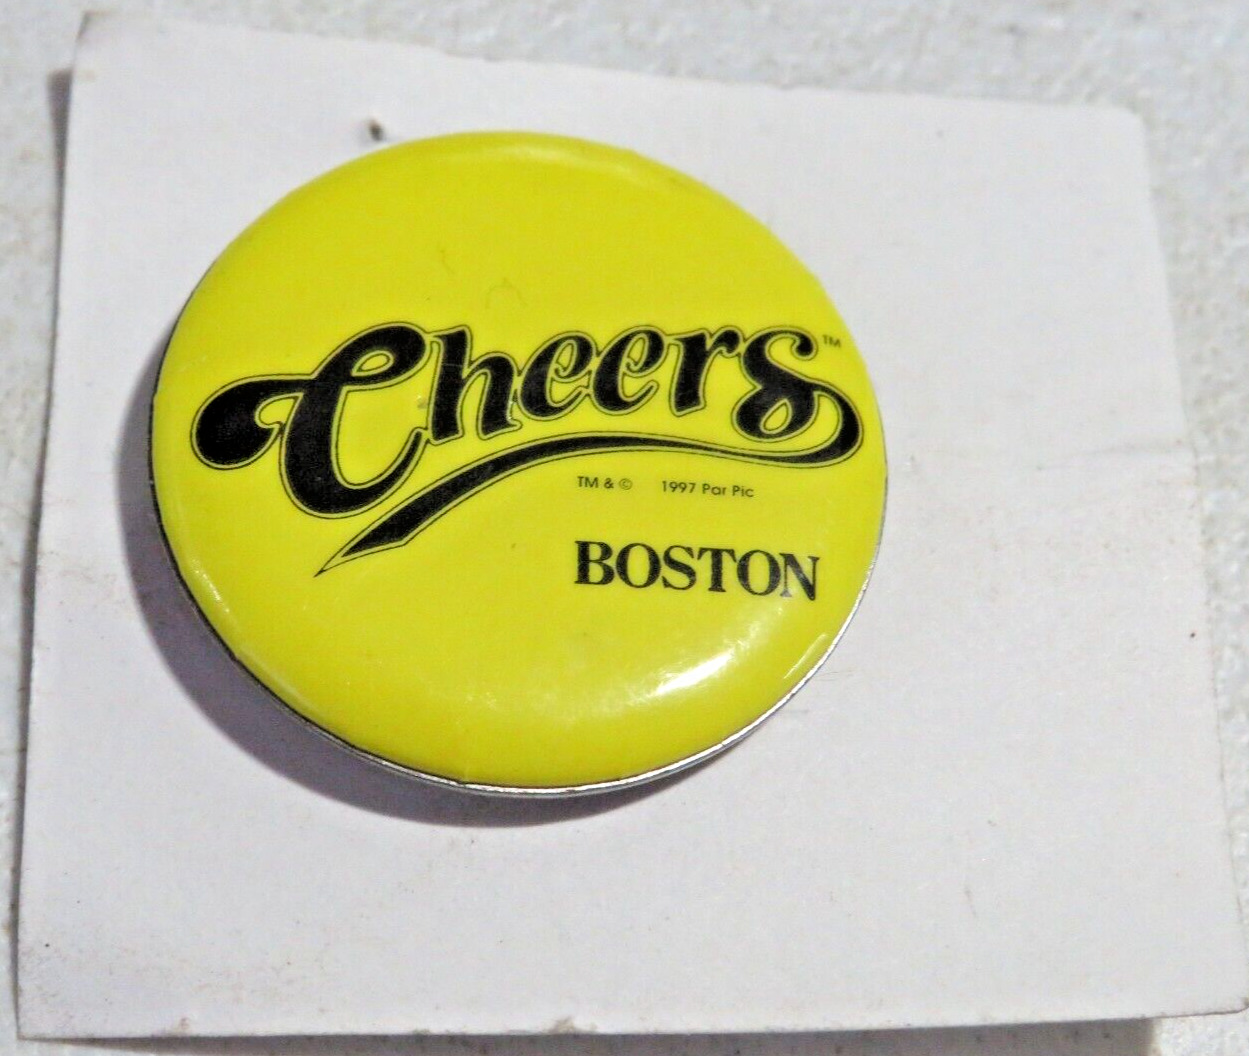 Cheers Boston 1997 Vintage Pin Pinback Button New Par Pic